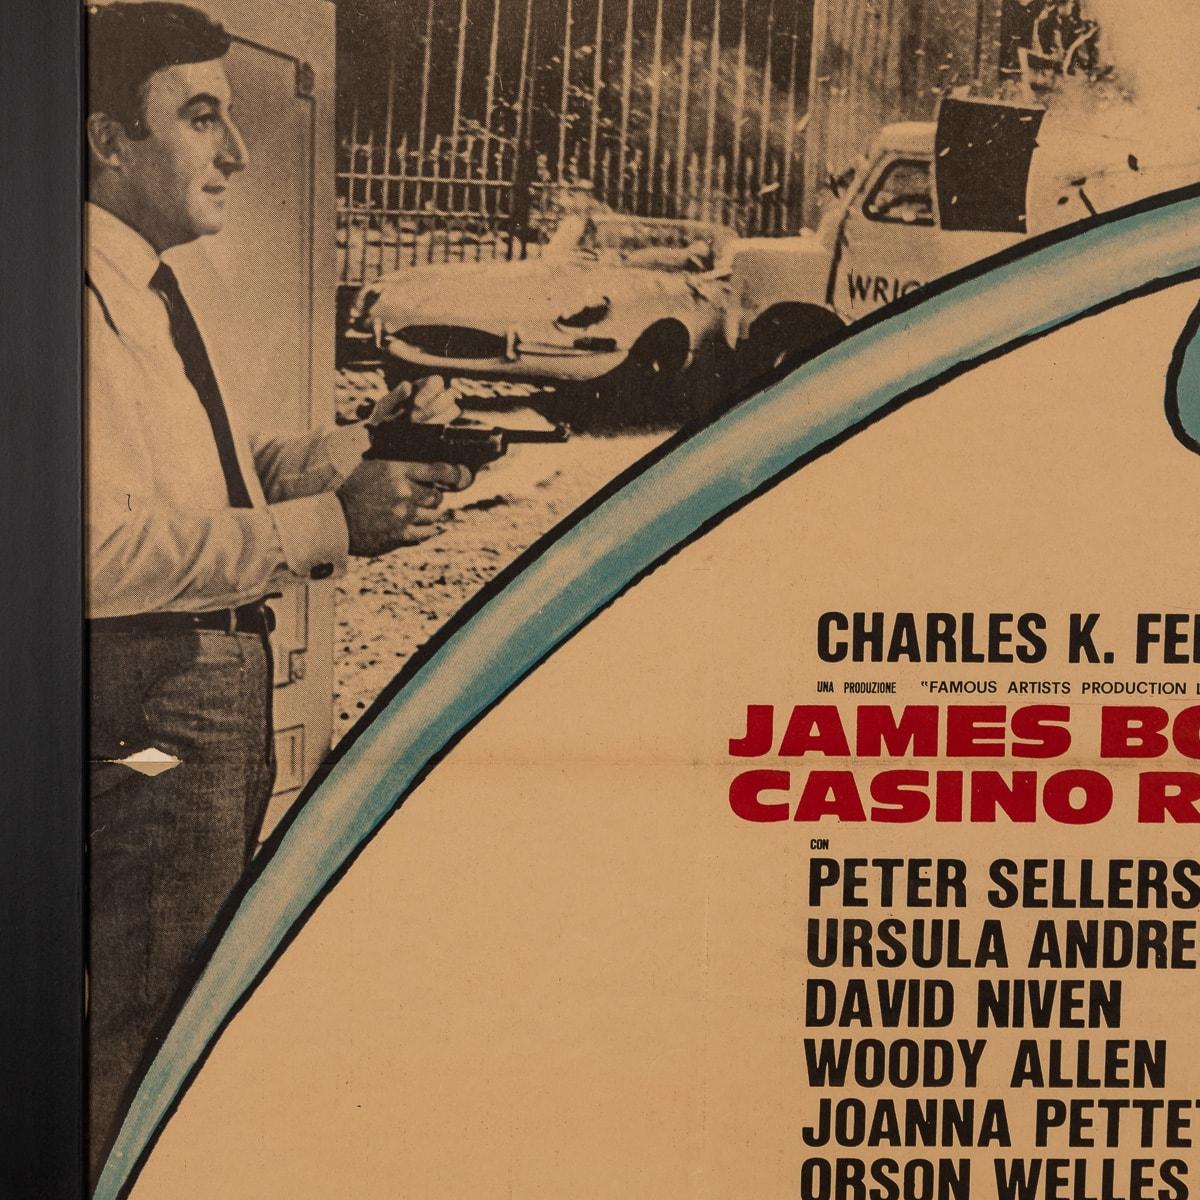 British A Framed Original James Bond 007 'Casino Royale' Movie Poster, c.1967 For Sale